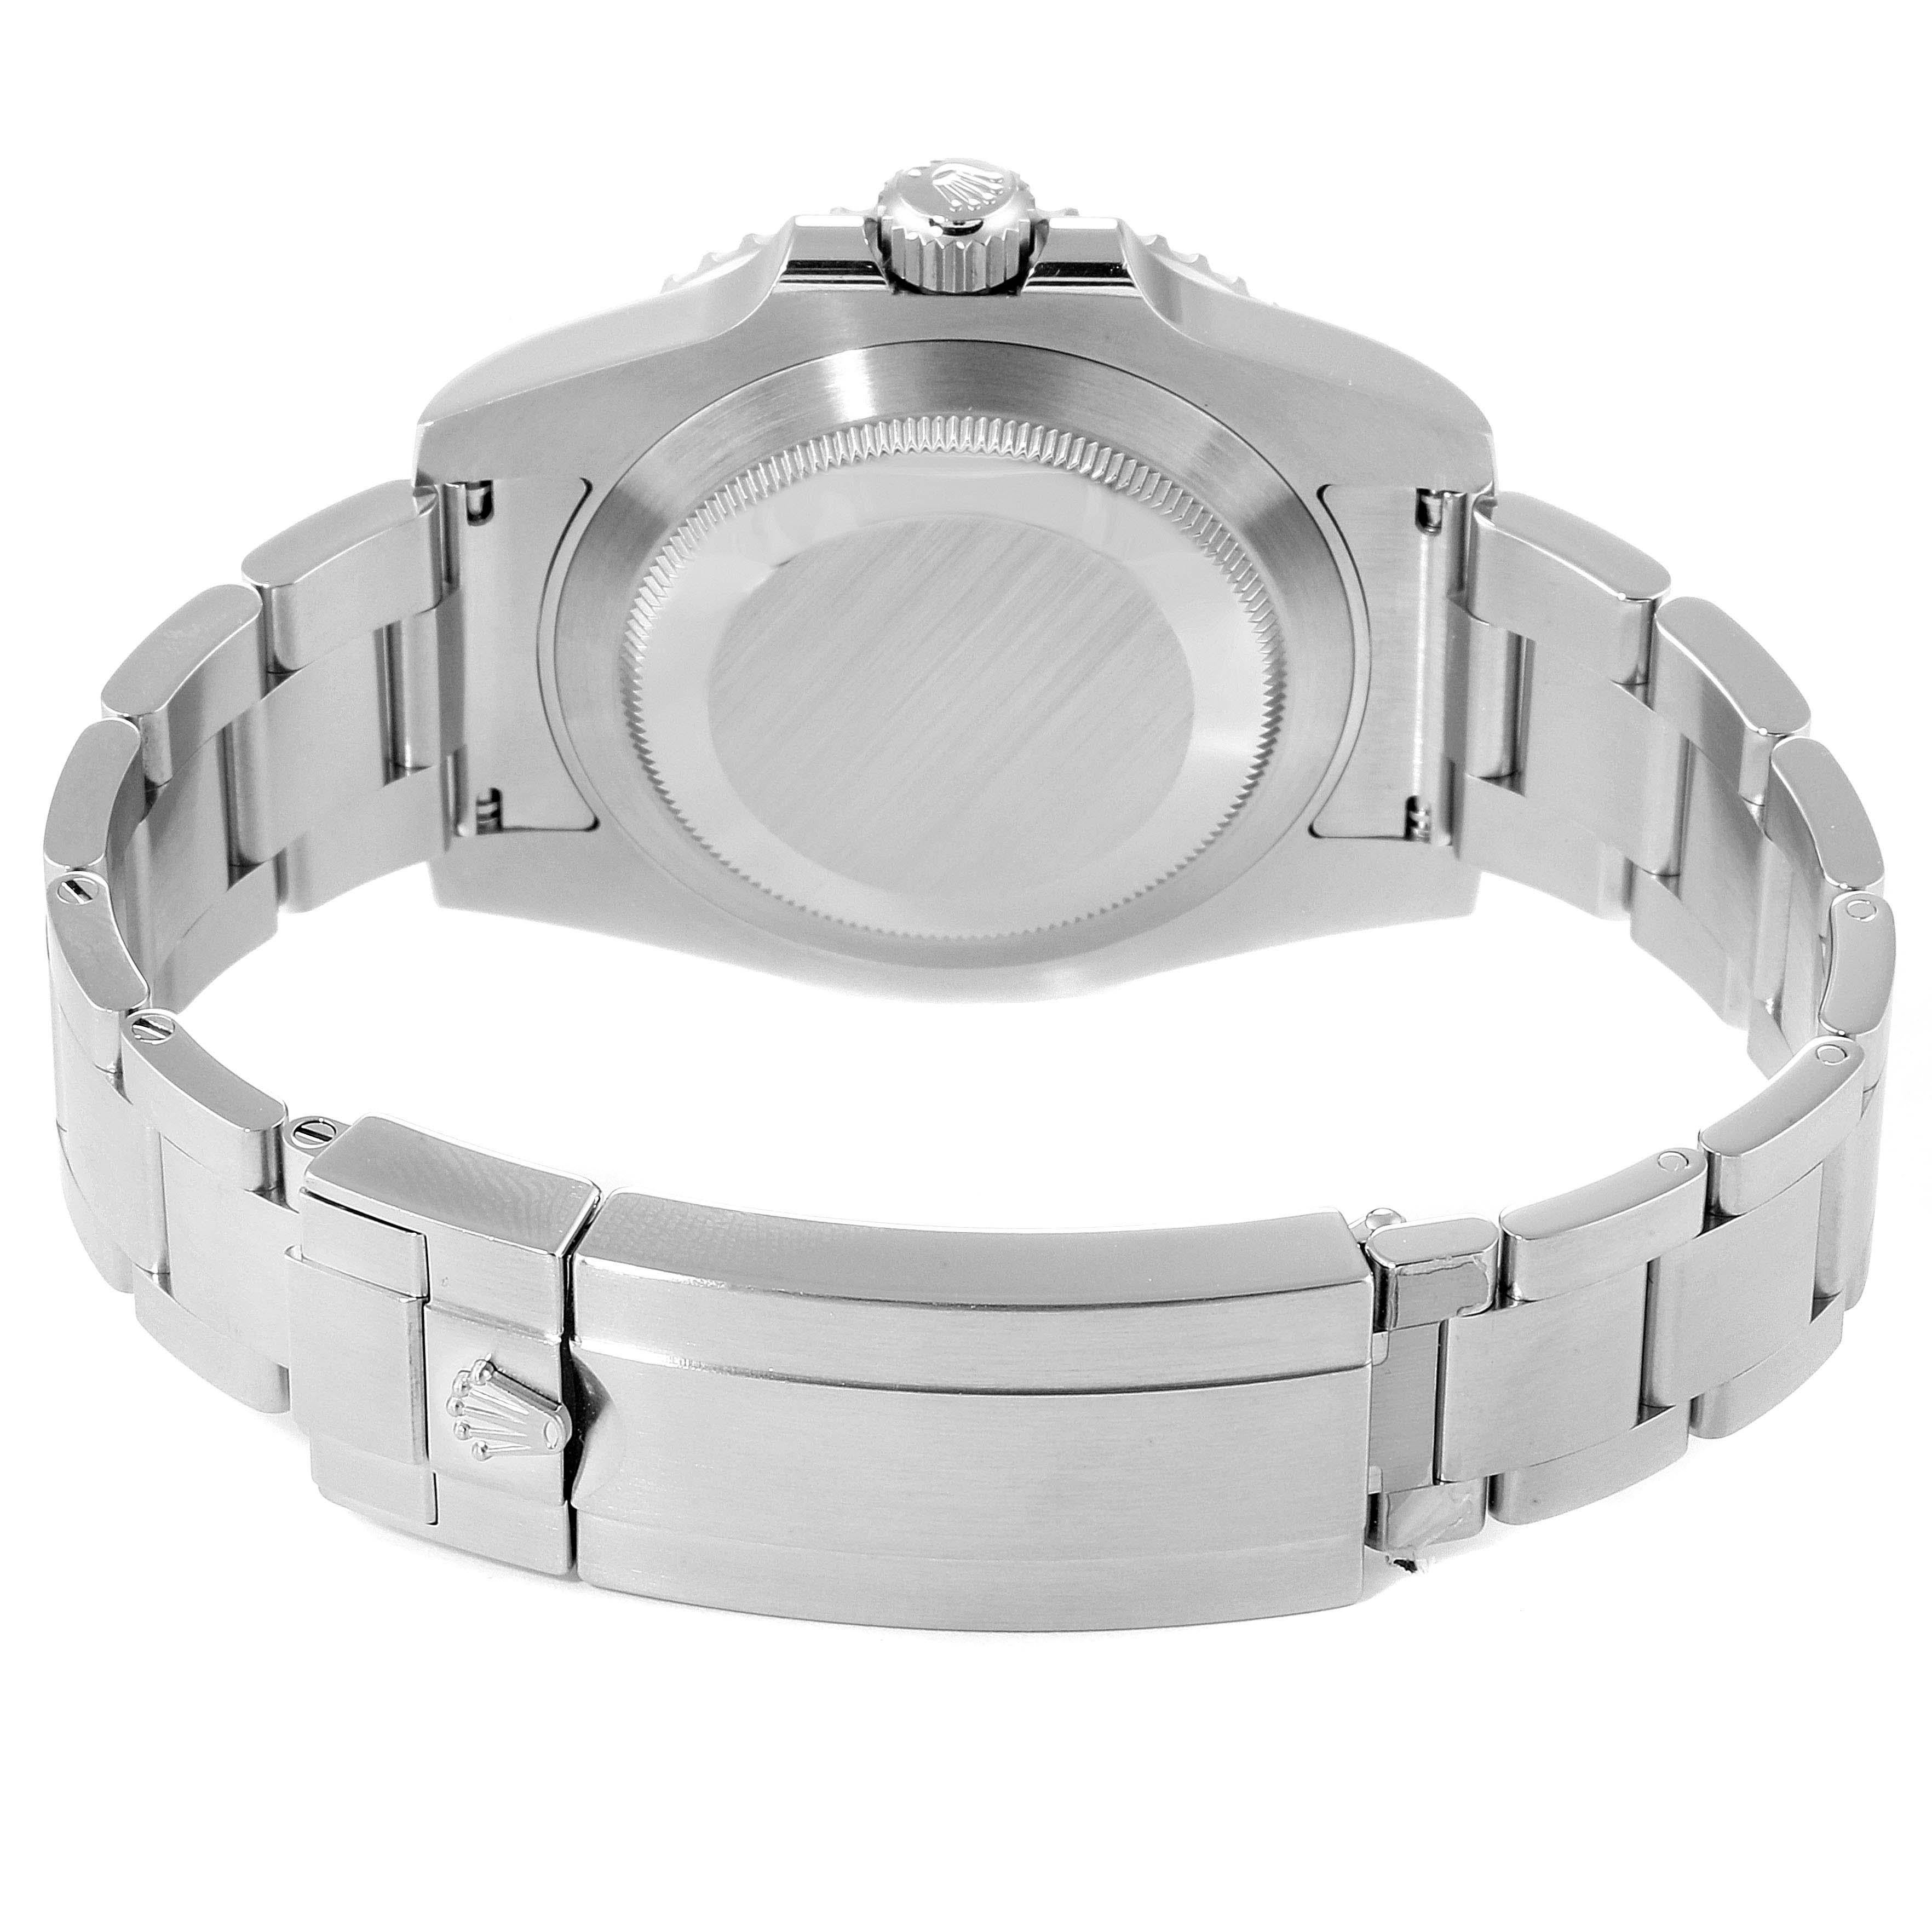 Rolex Submariner Ceramic Bezel Black Dial Steel Men's Watch 116610 6